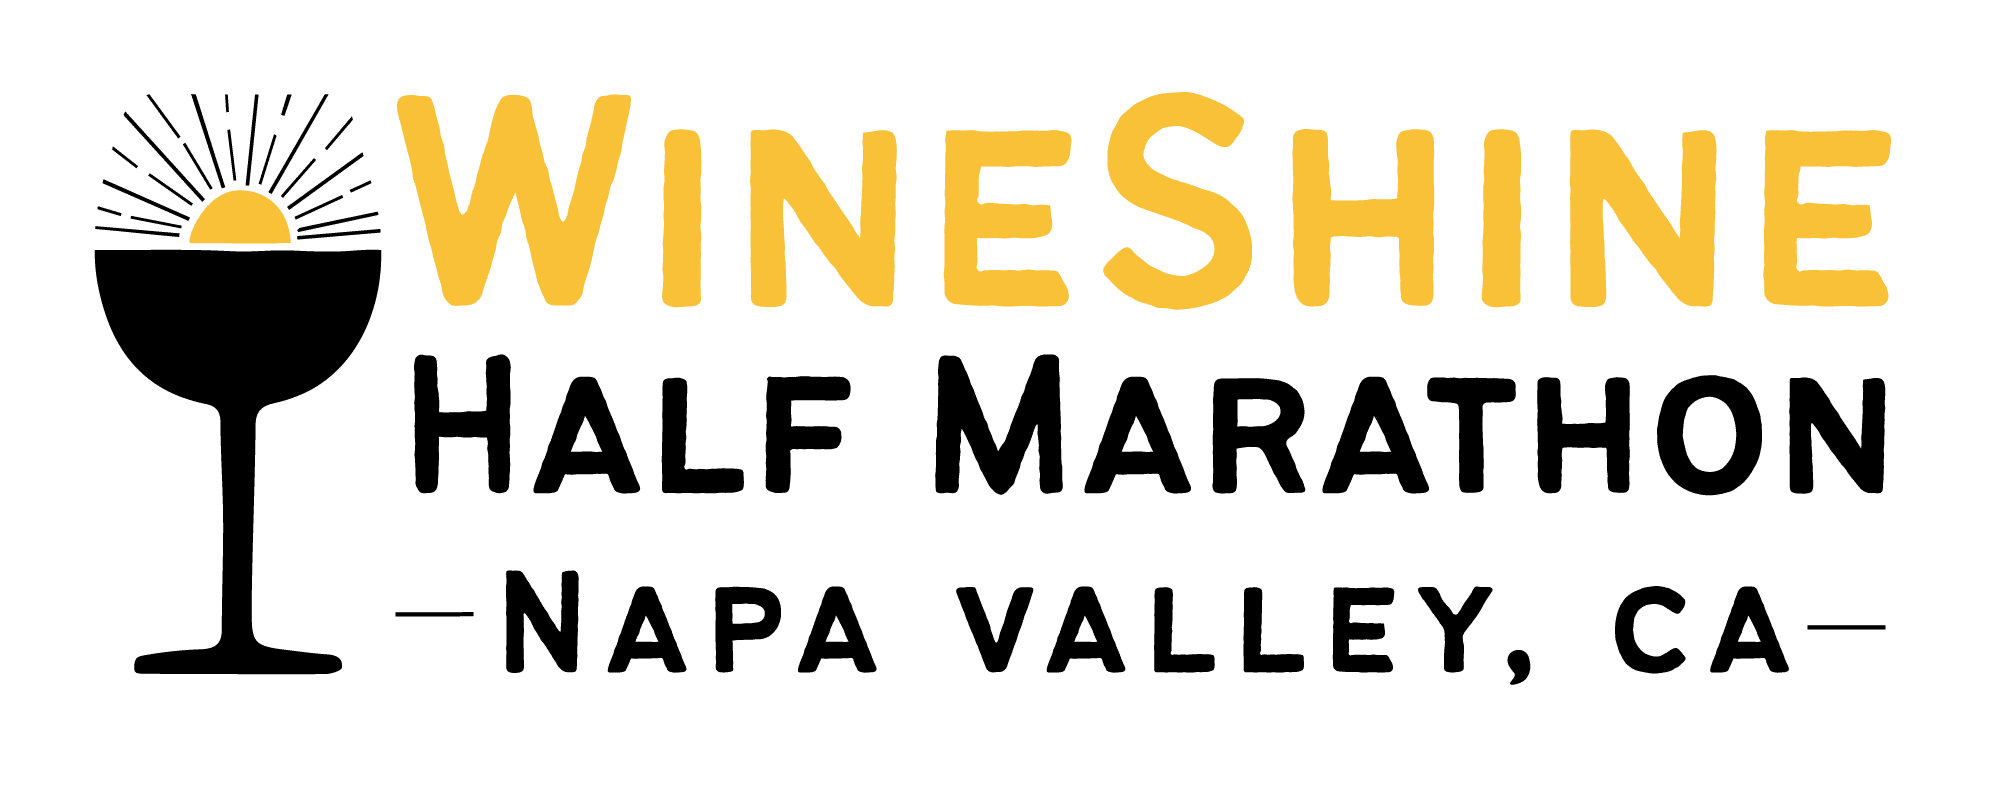 WineShine Half Marathon logo